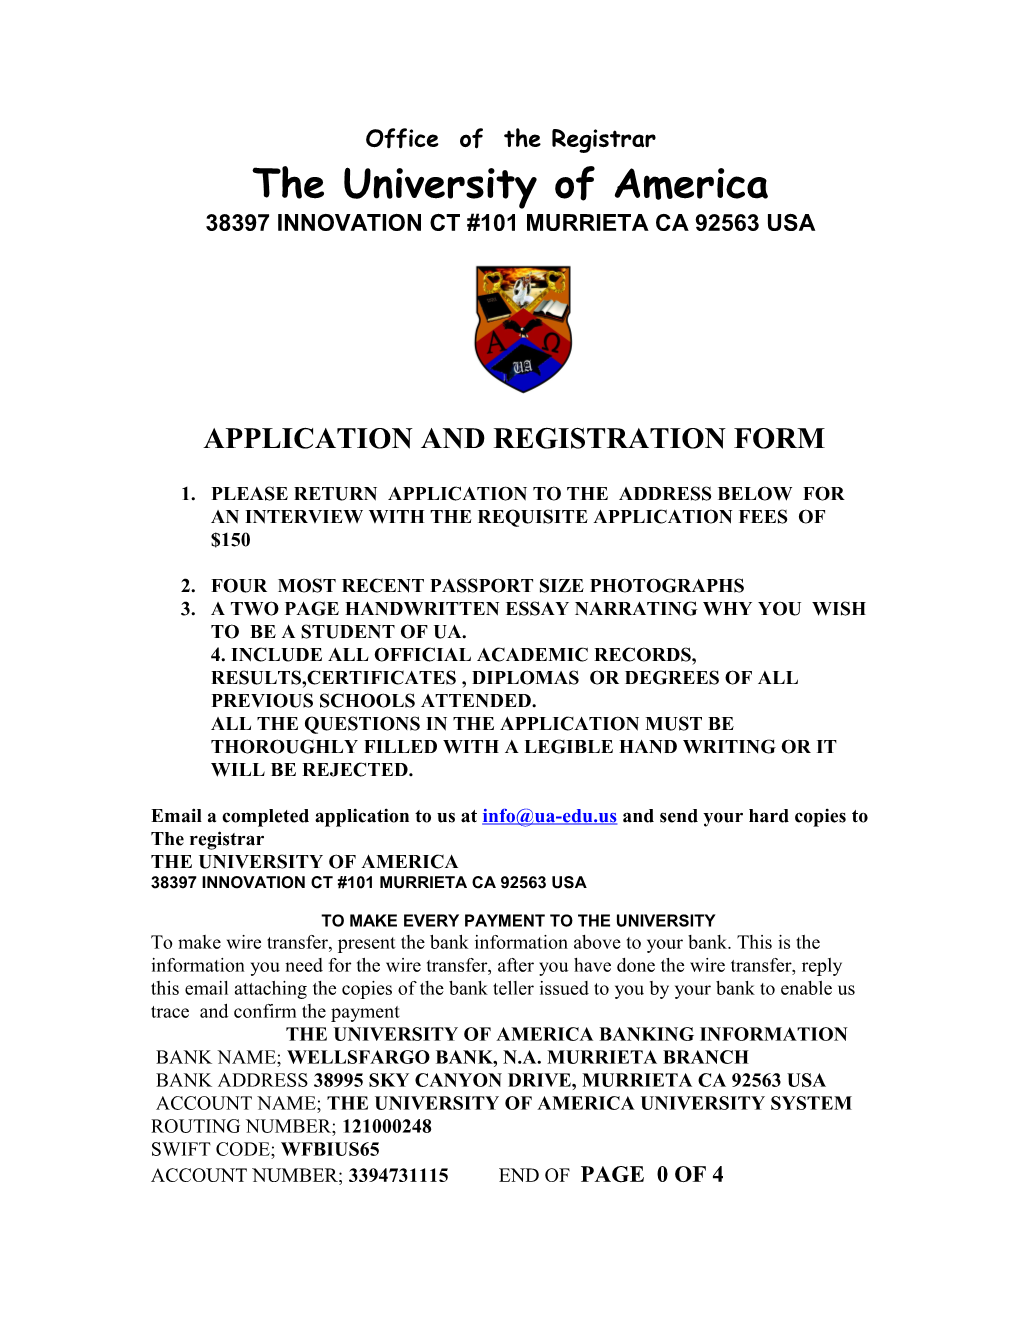 University of America